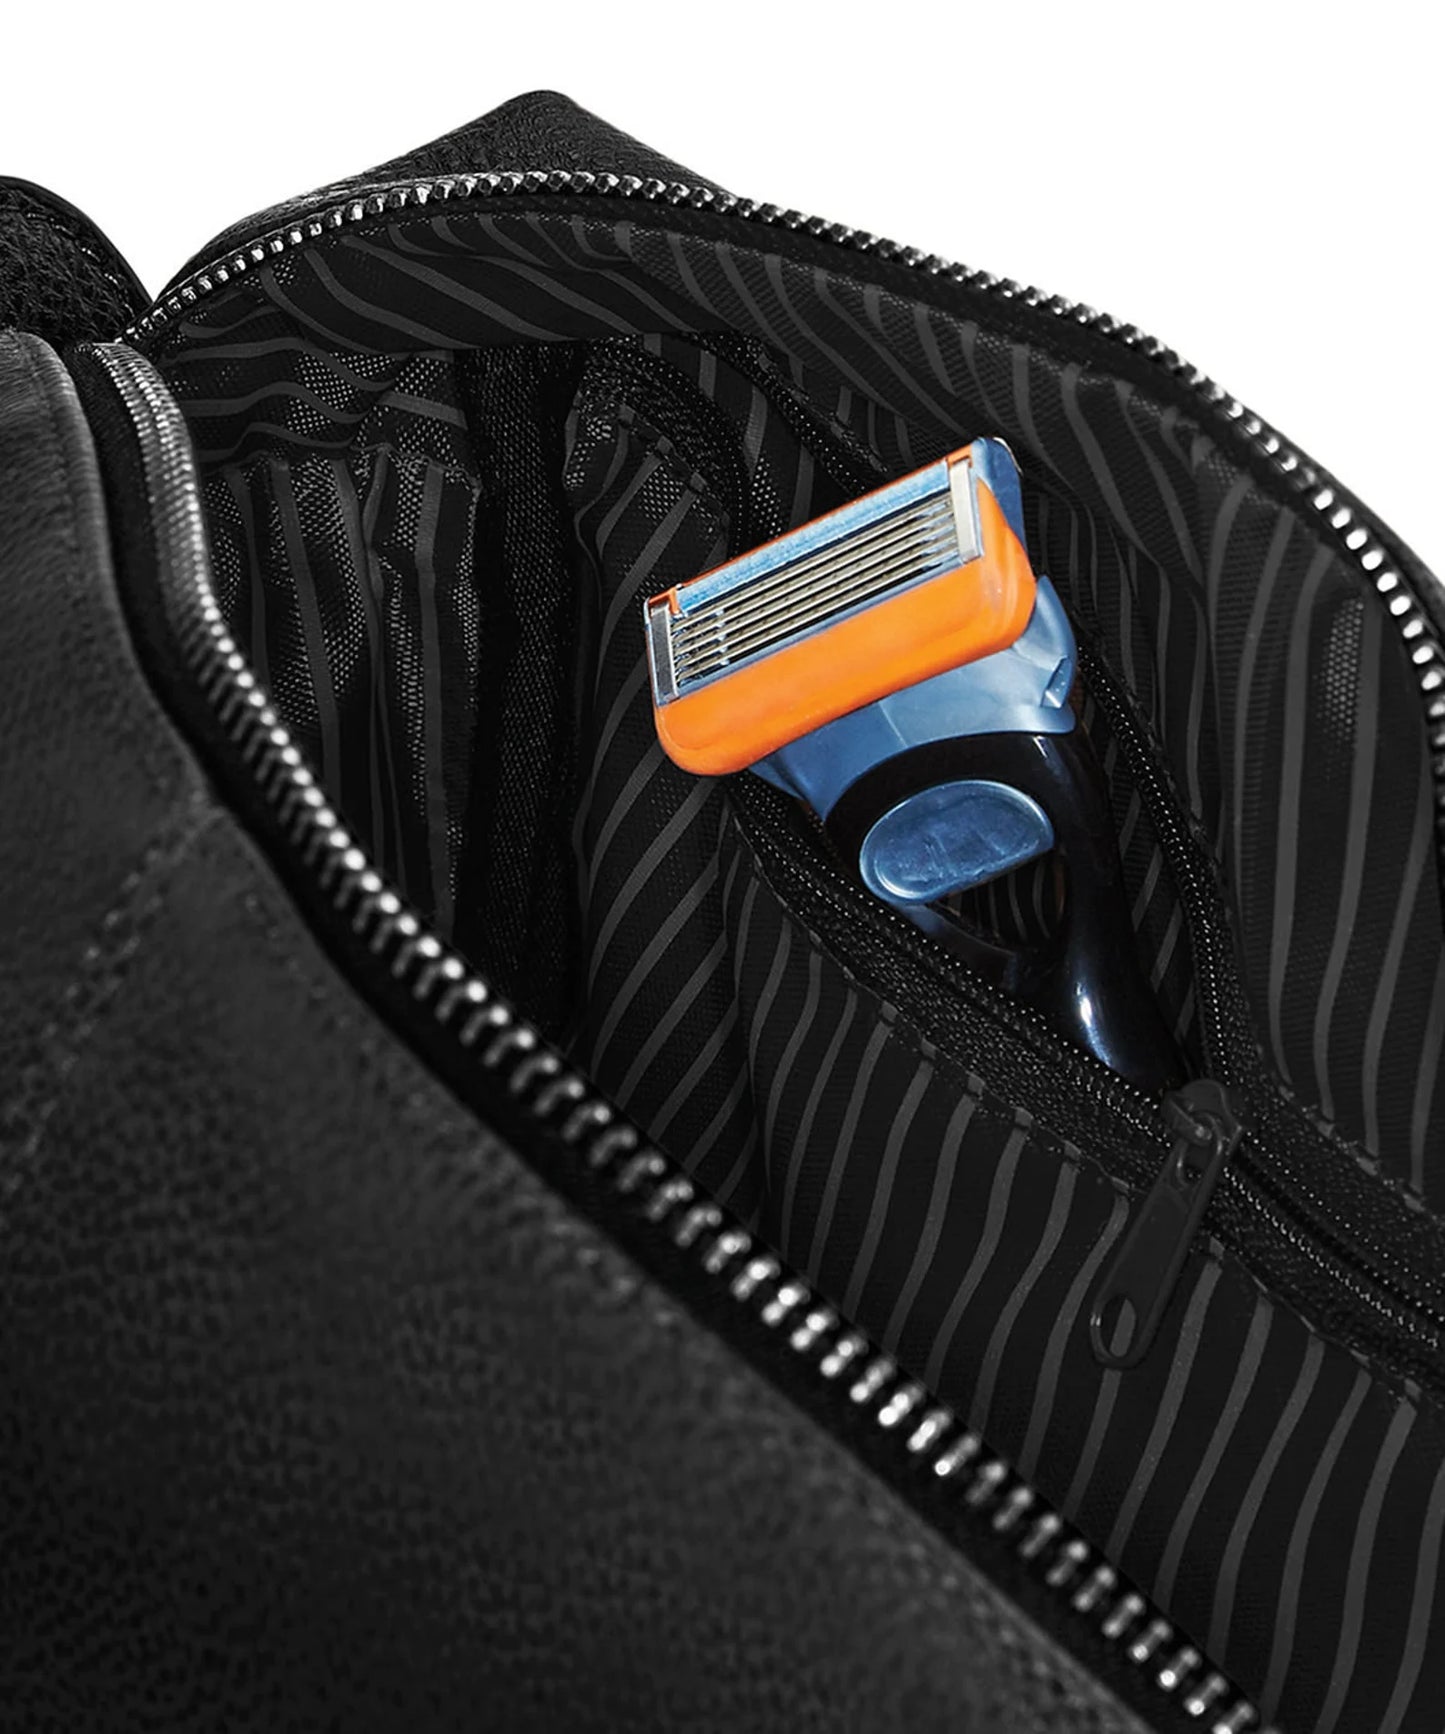 Personalised Mans Wash Bag & Wallet